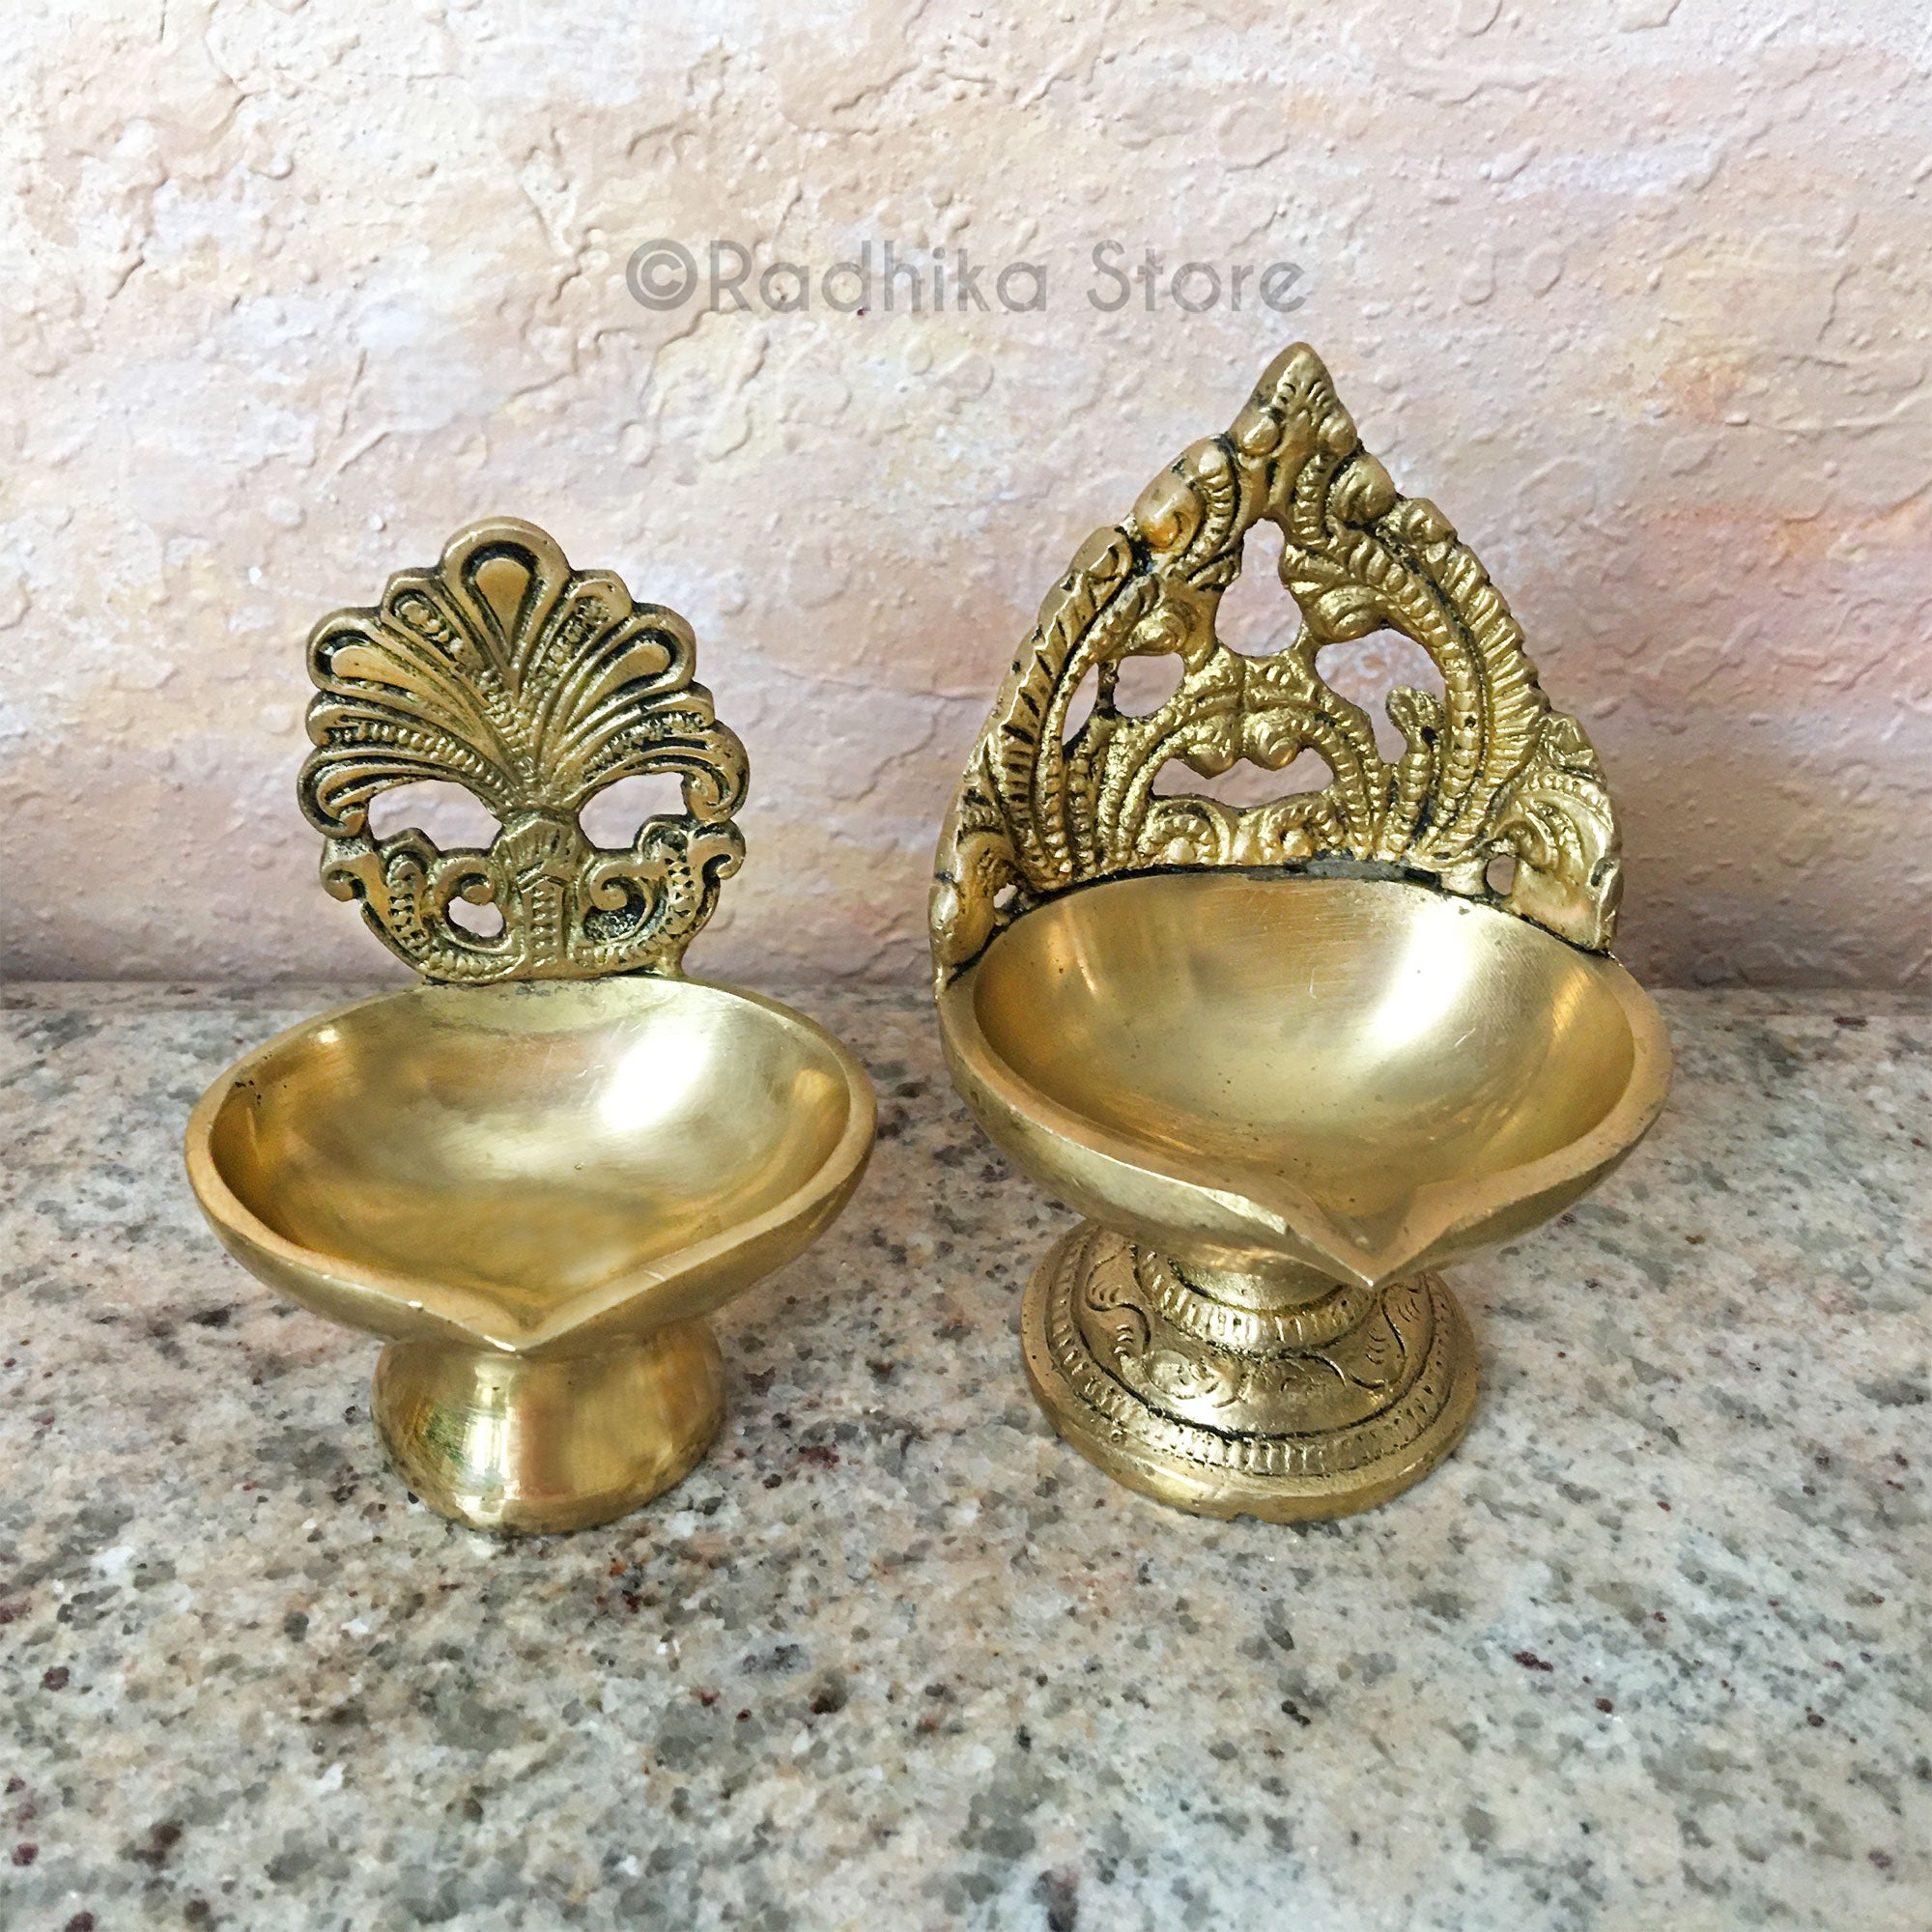 Peacock Plume - Brass Offering Ghee Lamp - (Diya) - Choose size